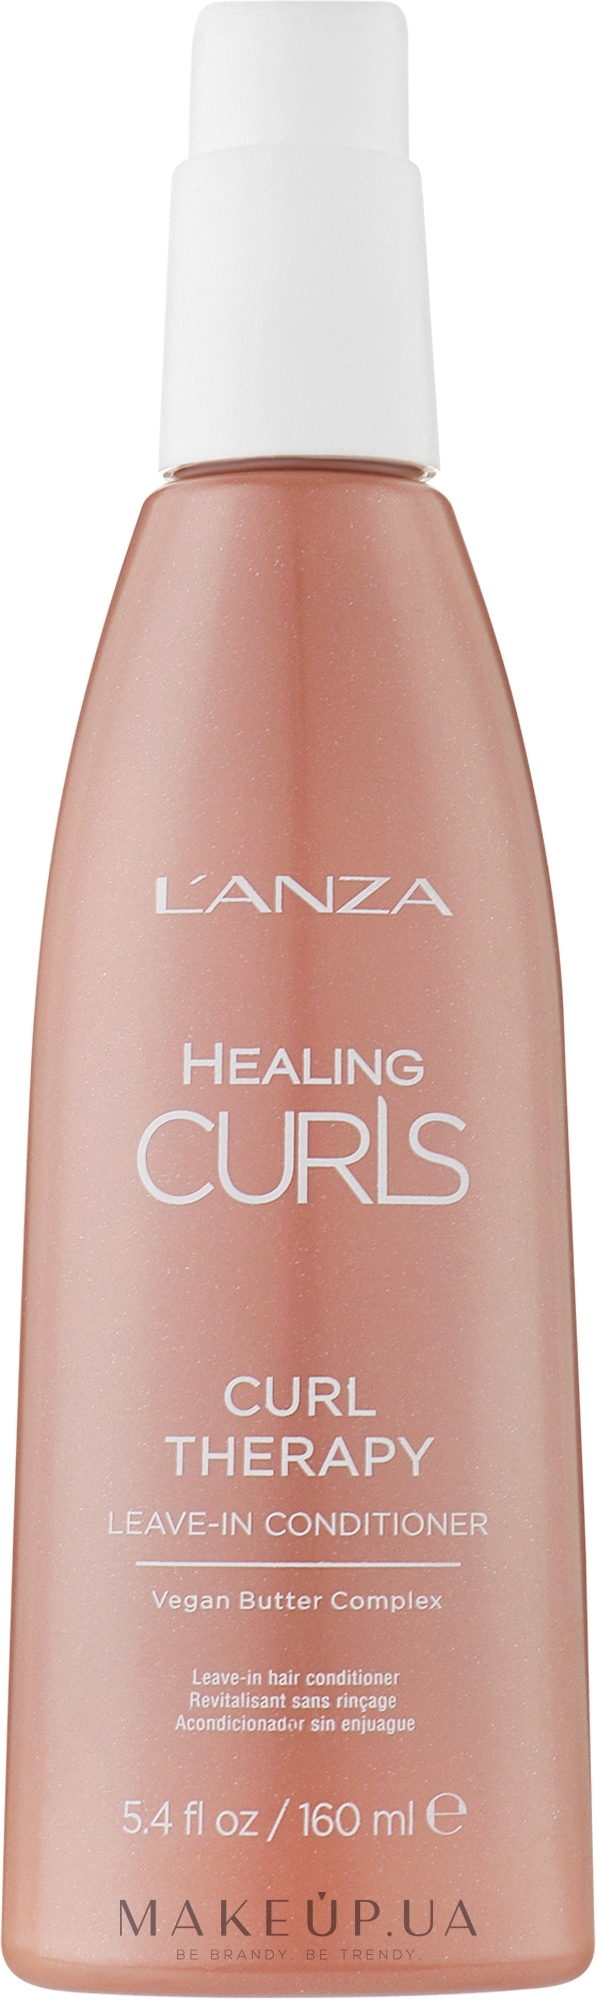 Несмываемый увлажняющий кондиционер для волос - L'anza Curls Curl Therapy Leave-In Moisturizer — фото 160ml